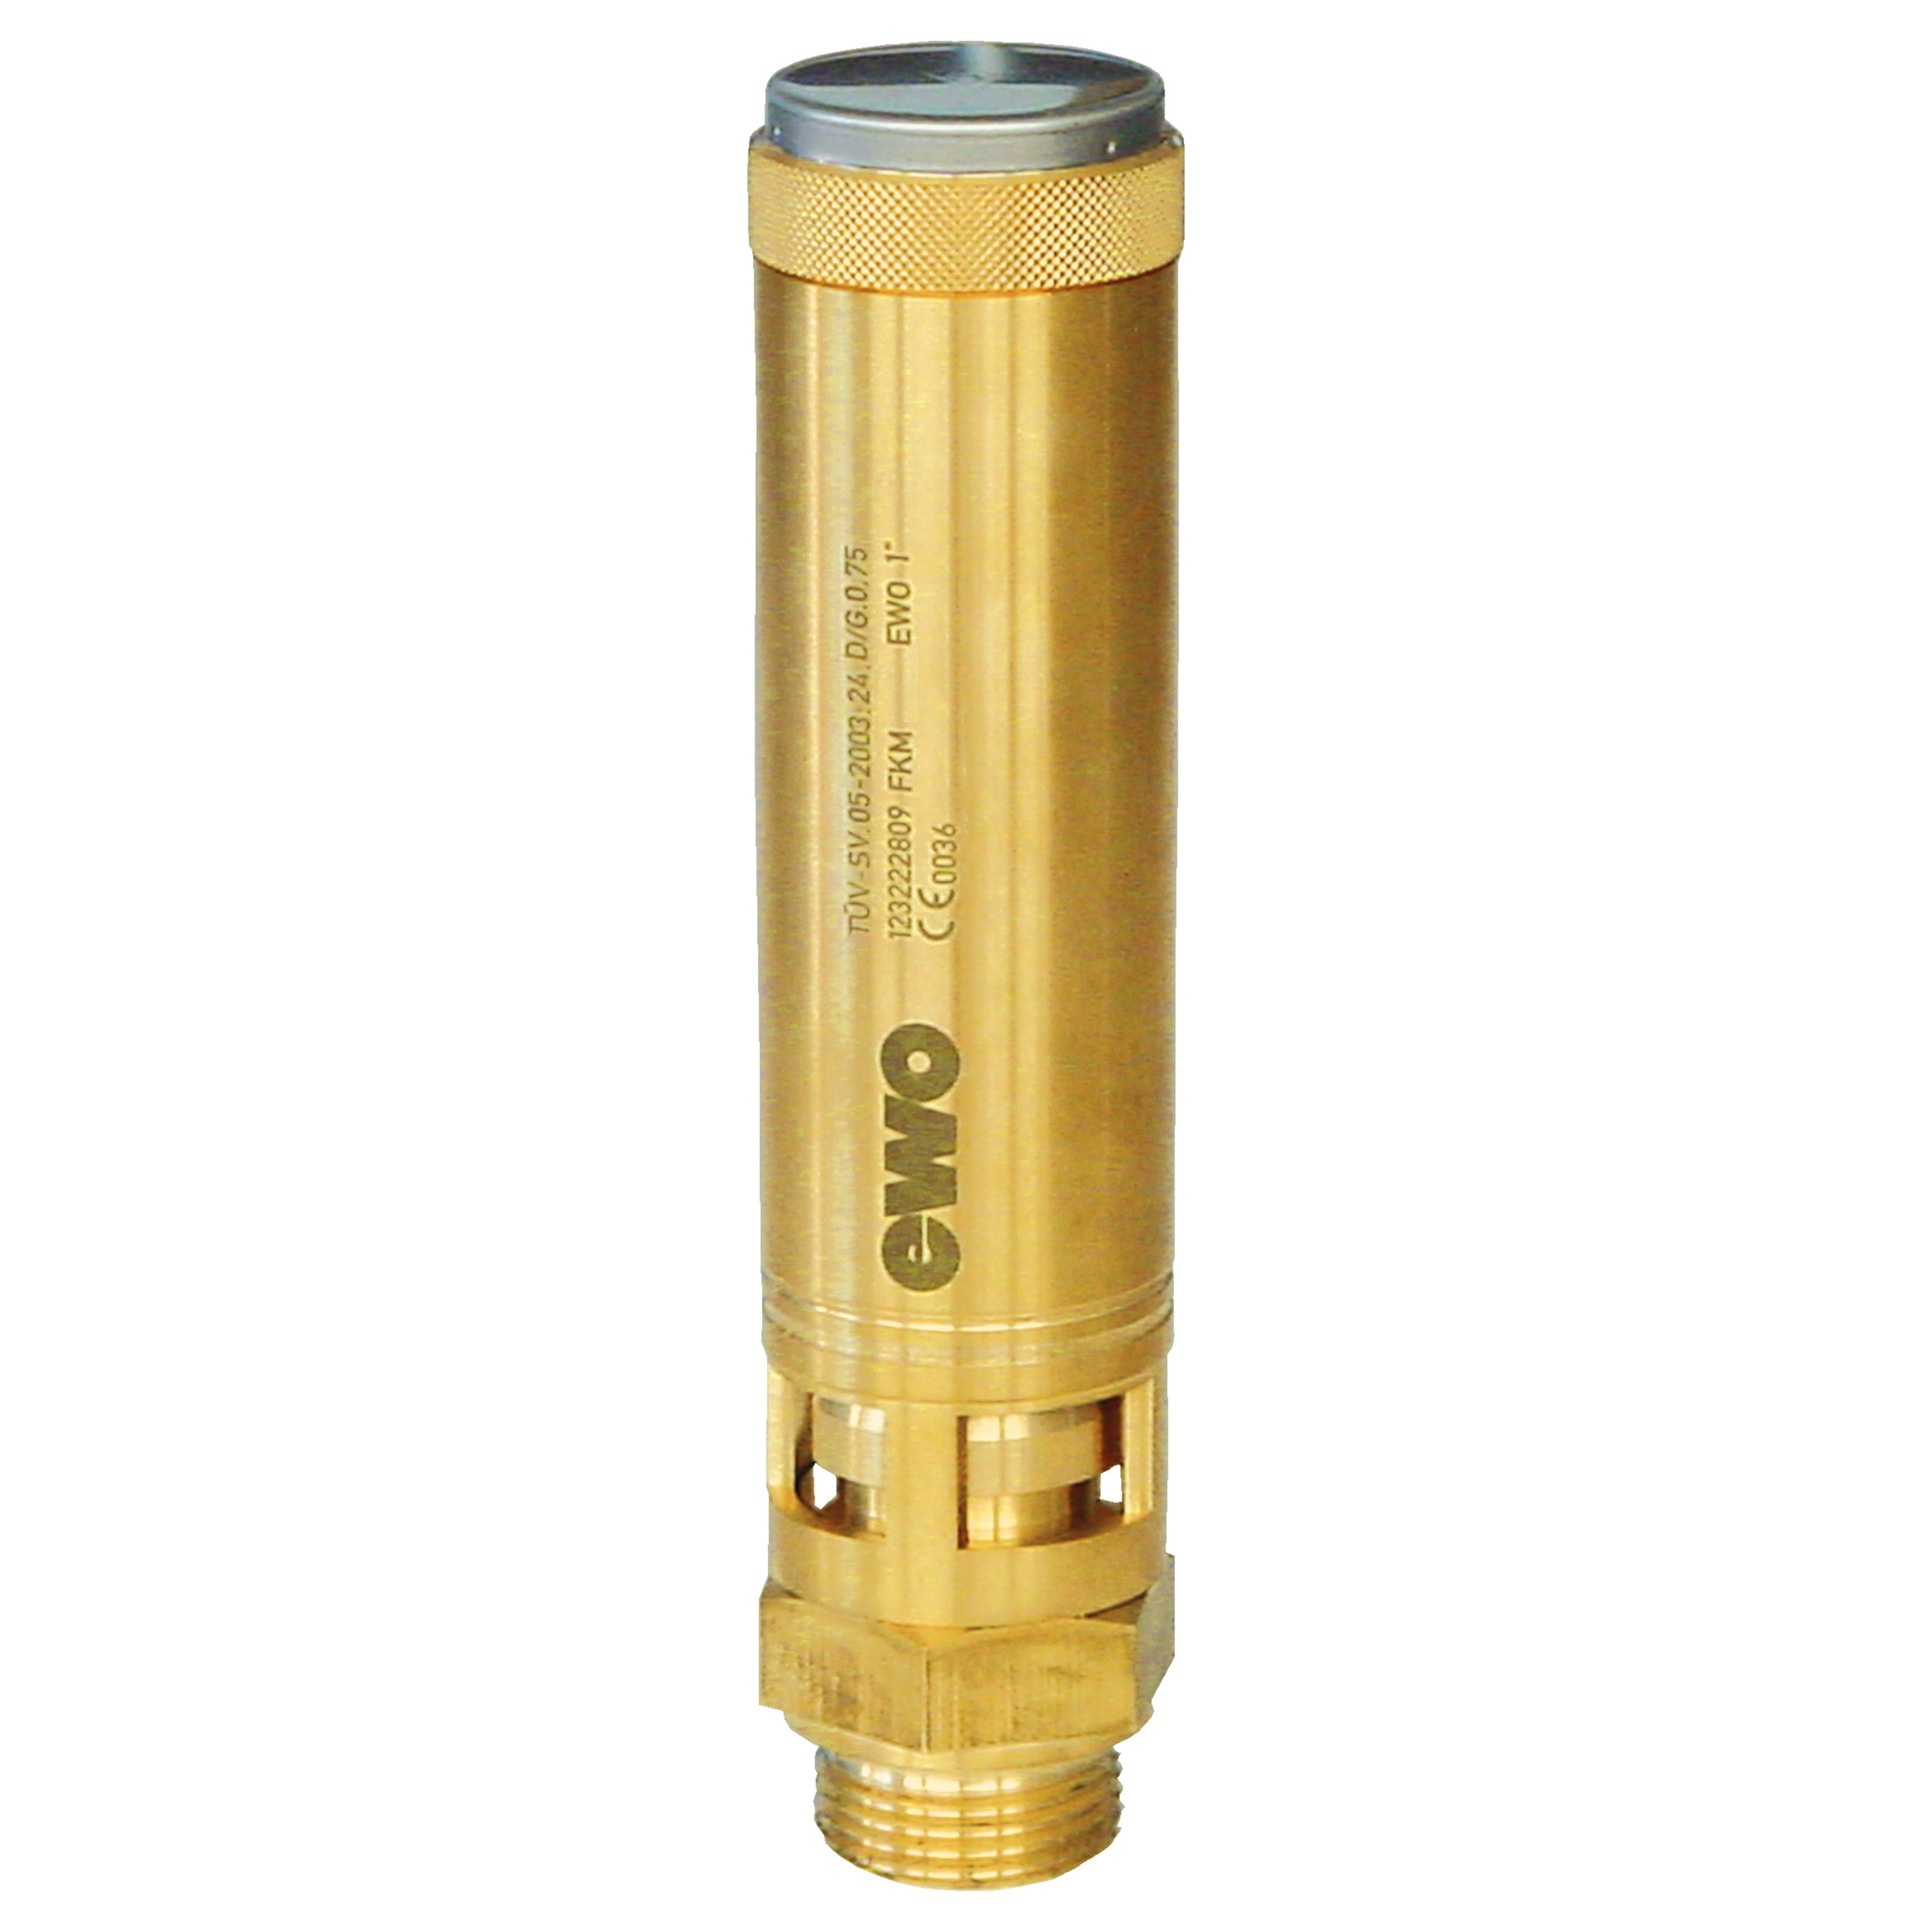 Savety valve component tested, D/G, G1½, DN 31, L: 215 mm, seal: FKM, set pressure 0.2–30 bar